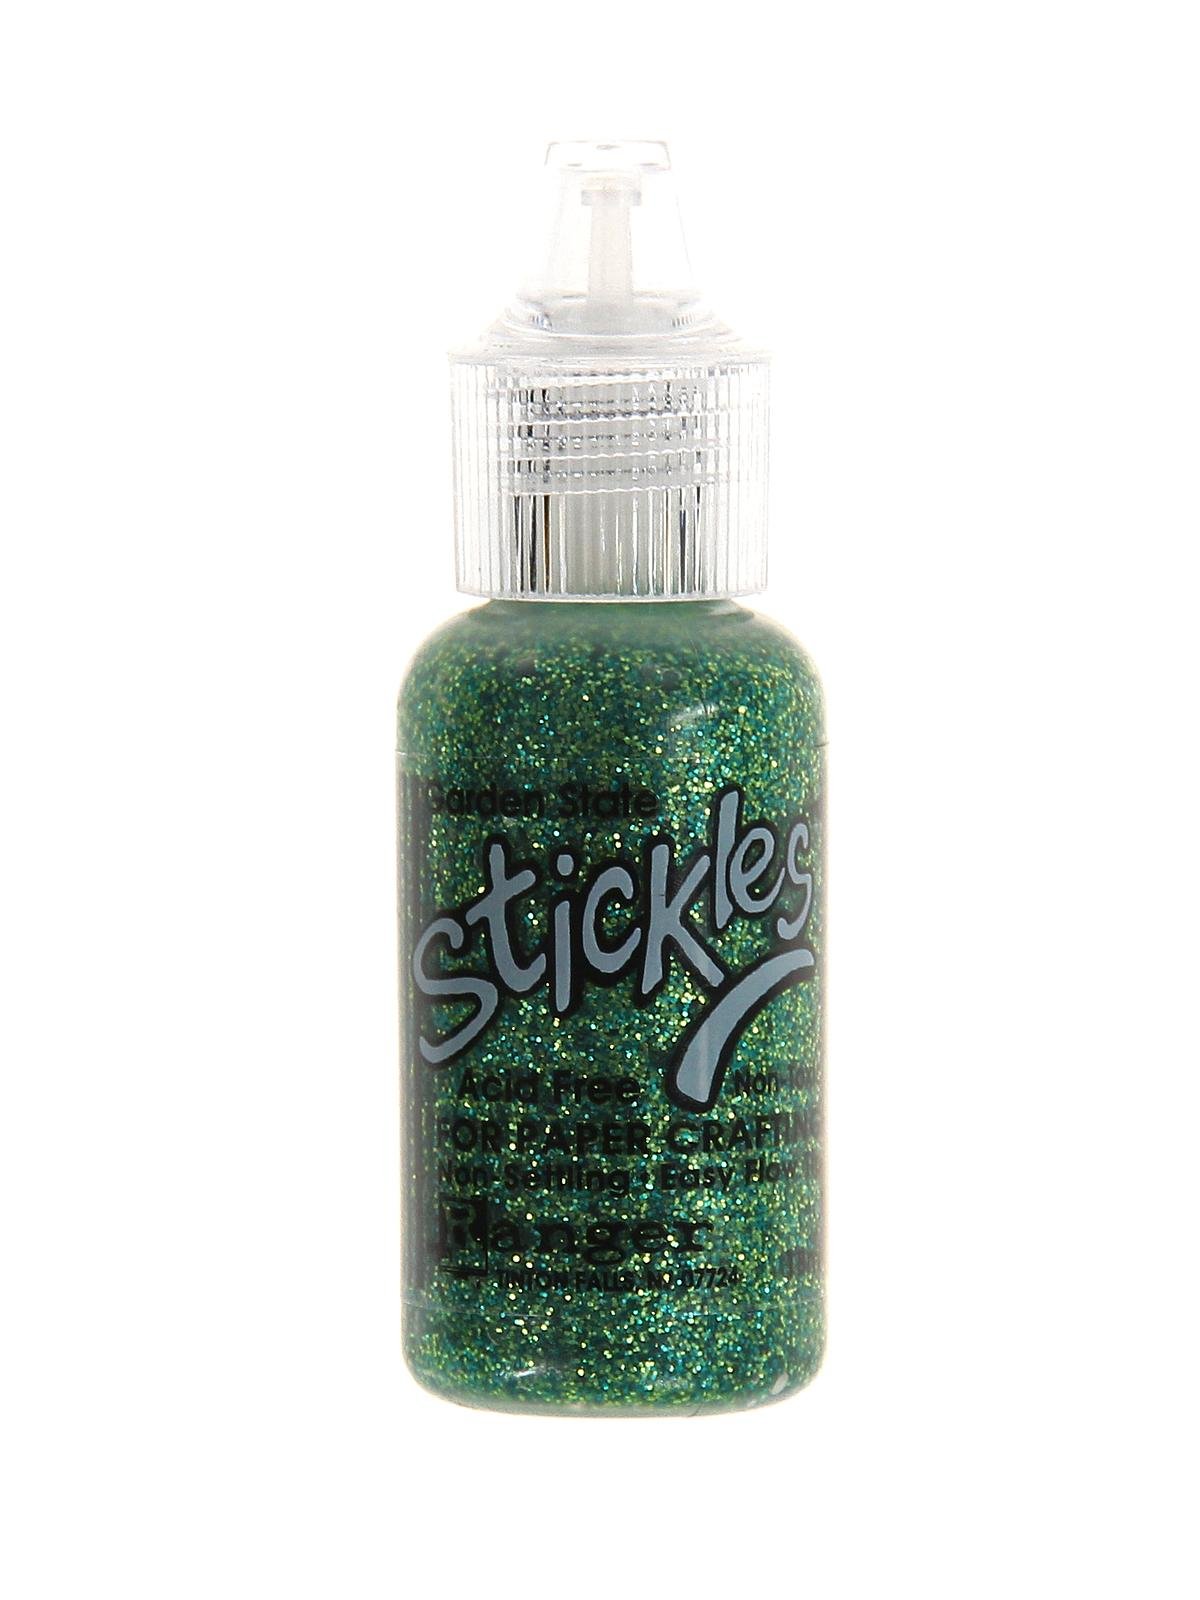 Ranger - Stickles Glitter Glue - Crystal